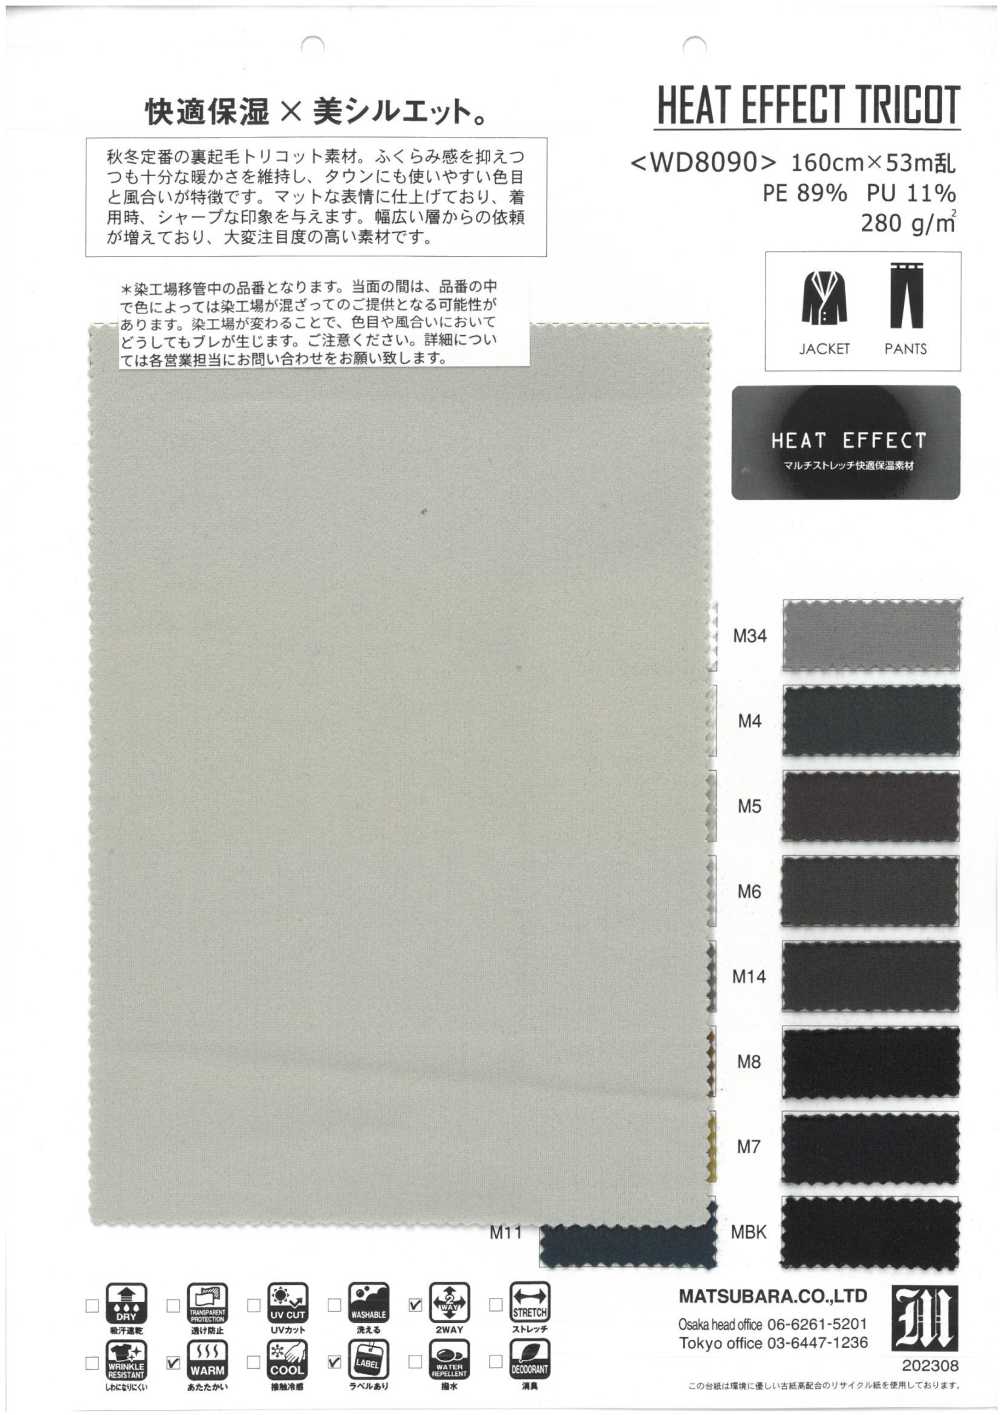 WD8090 HEAT EFFECT TRICOT[Textile / Fabric] Matsubara